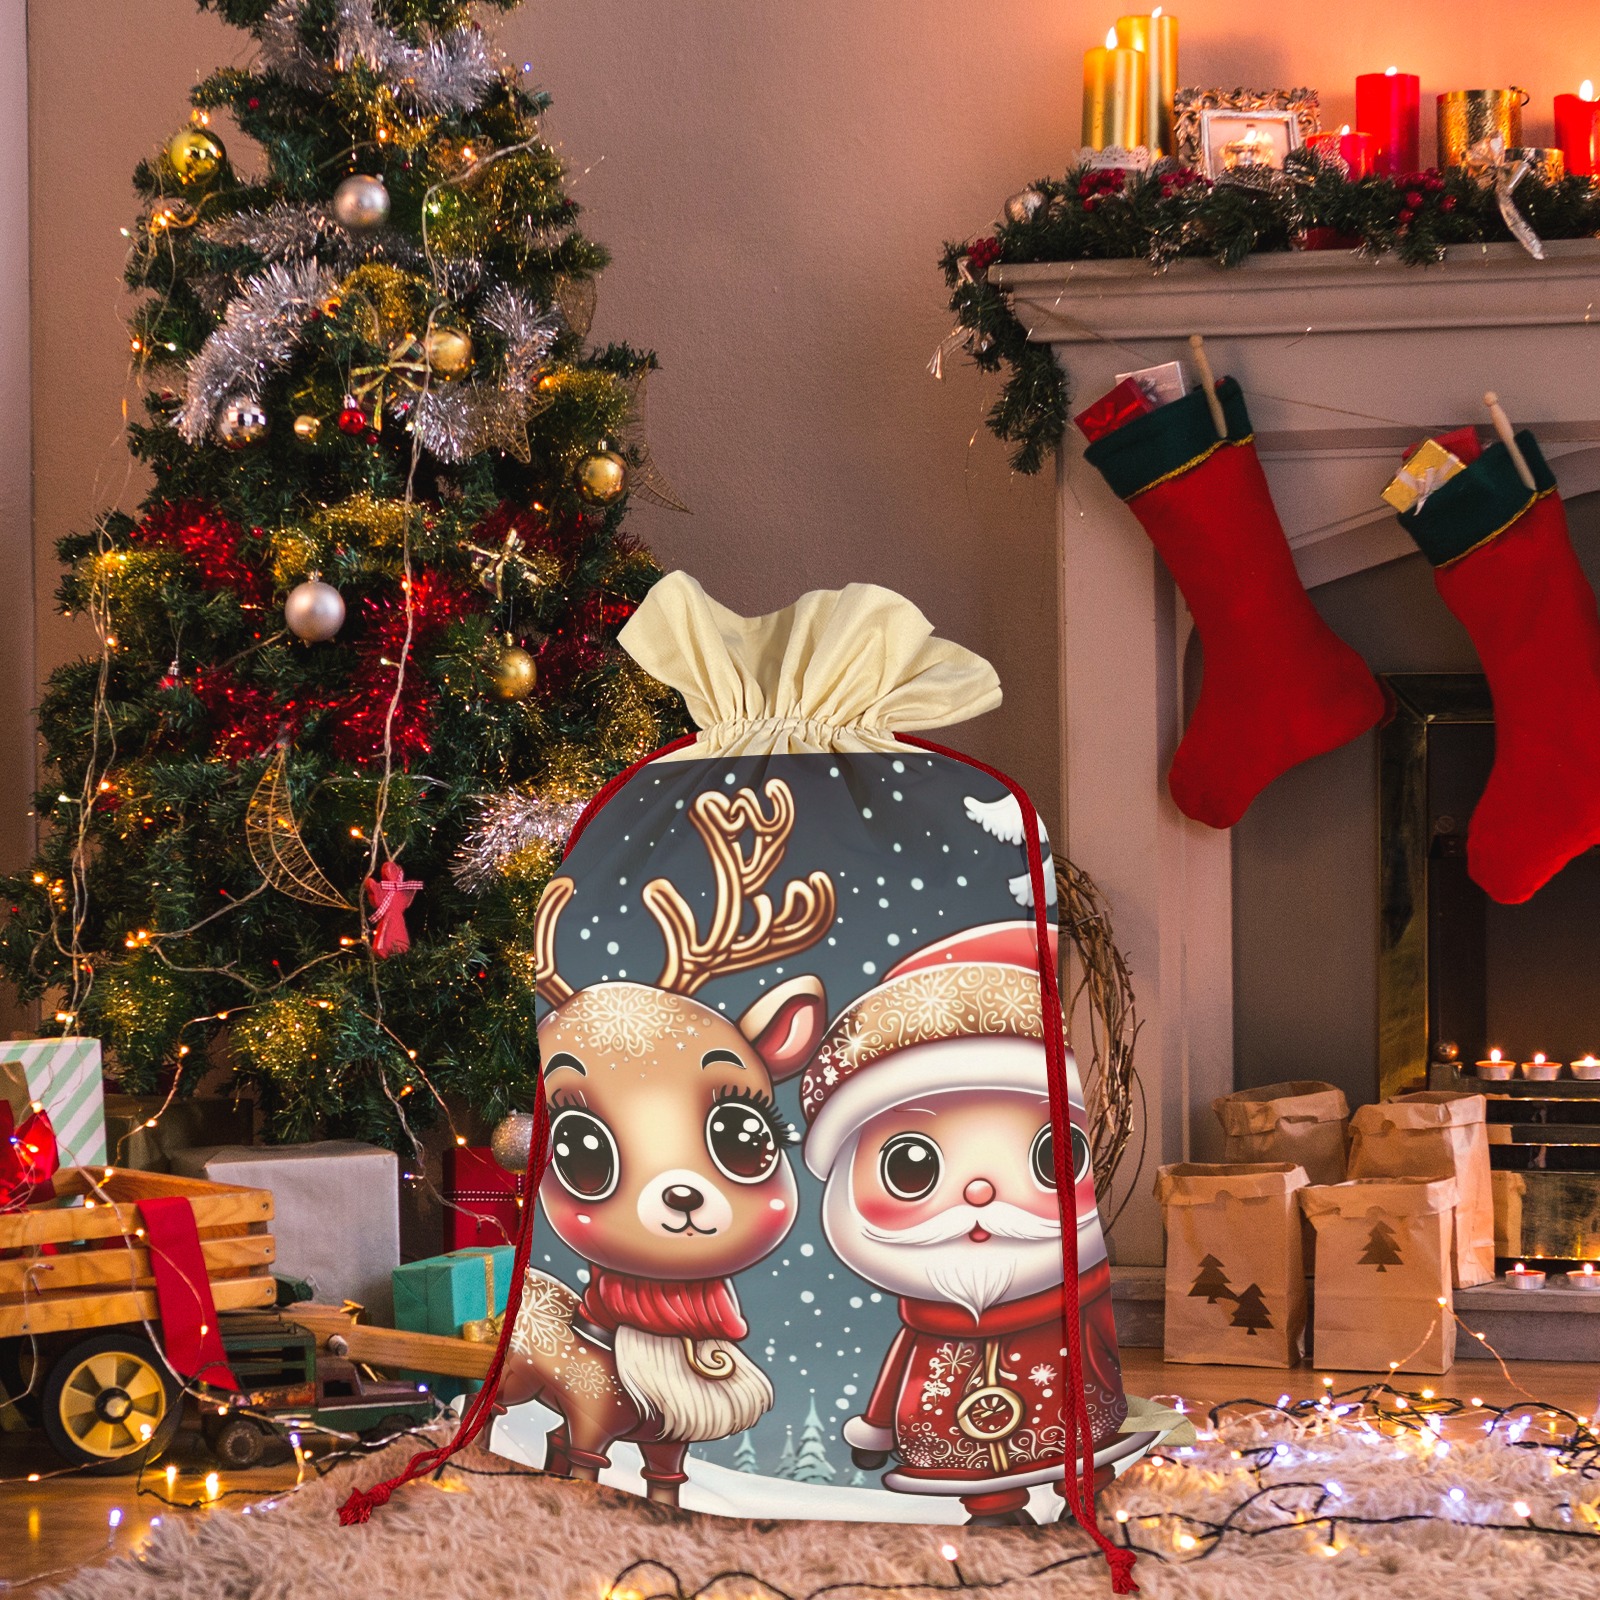 Santa and Reindeer 3 Pack Santa Claus Drawstring Bags (One-Sided Printing)